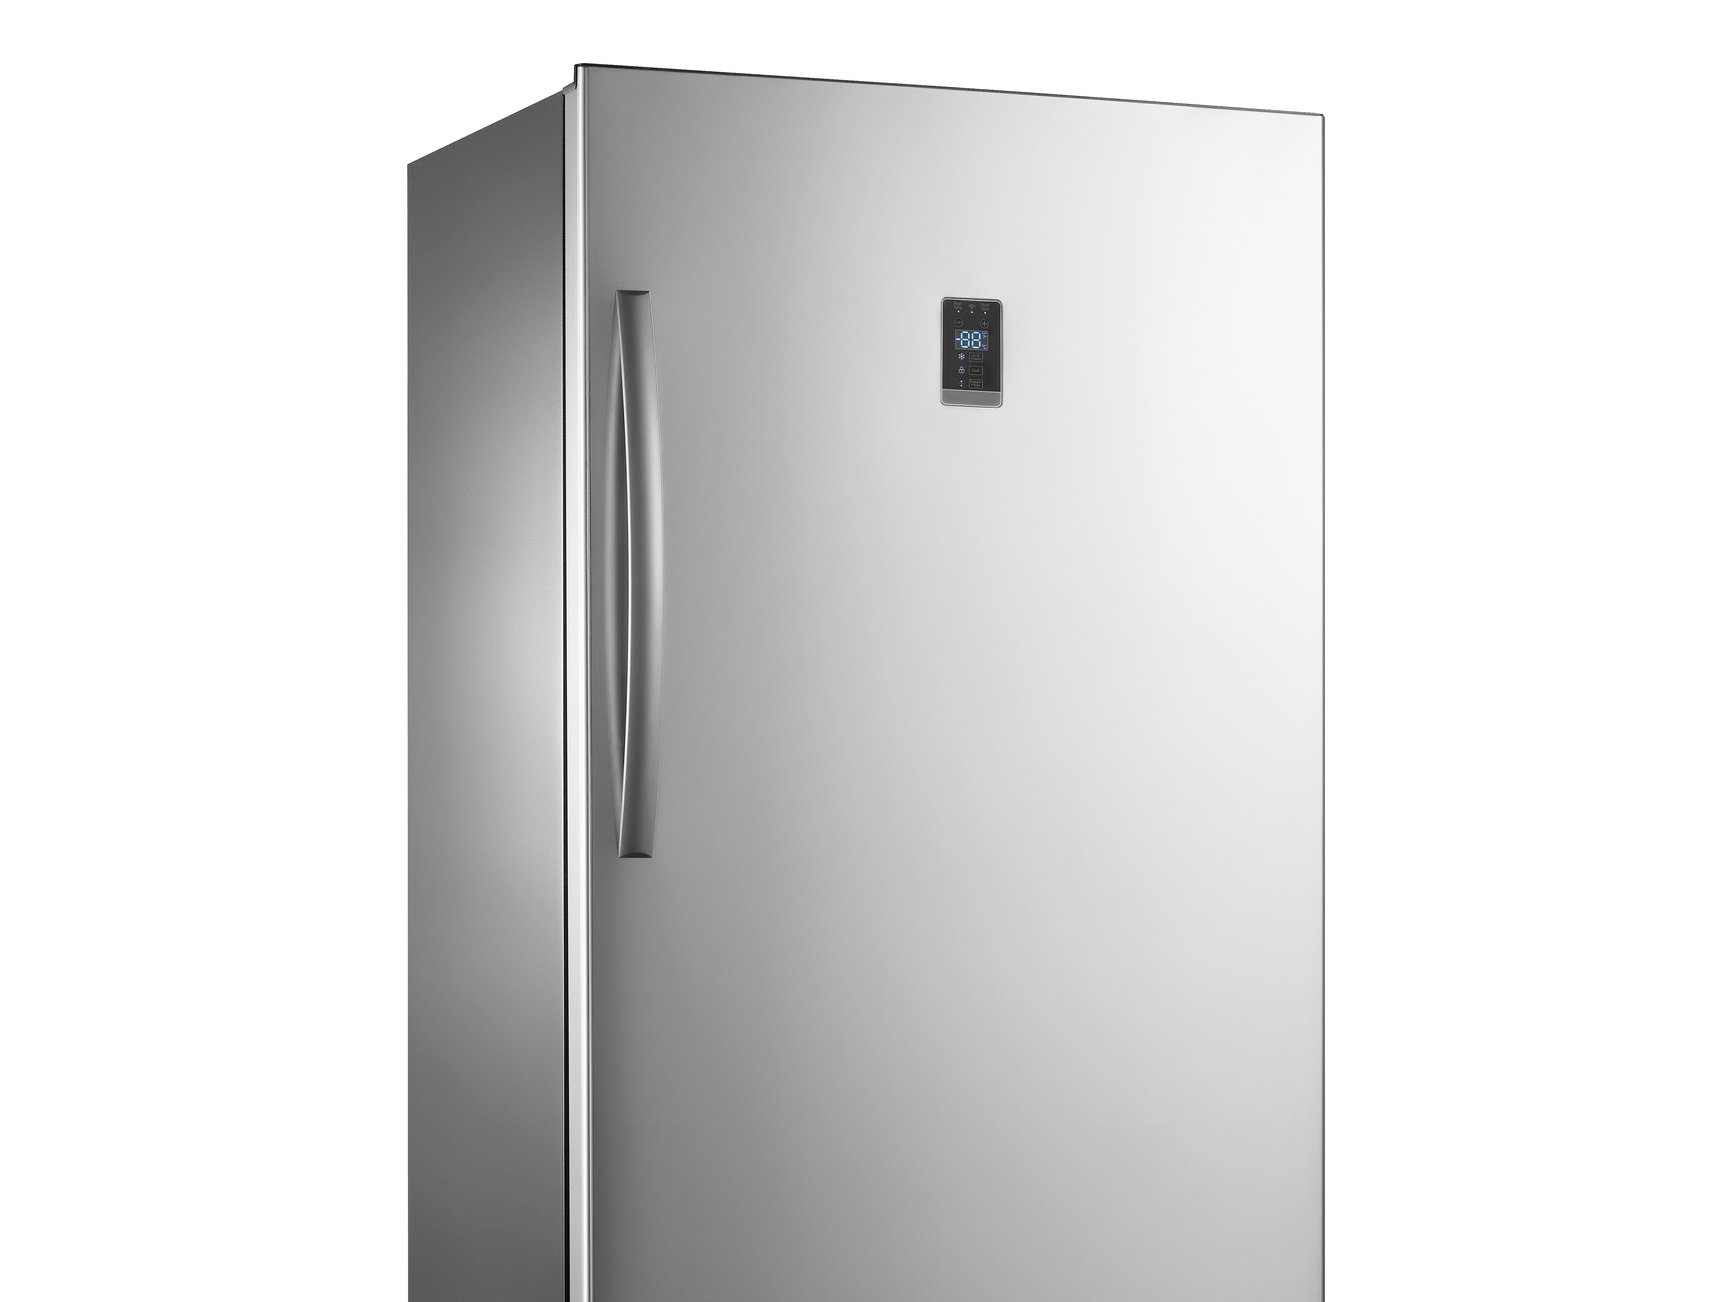 Freezer Less Refrigerator - Lockport, NY - Mullen’s Appliance Service